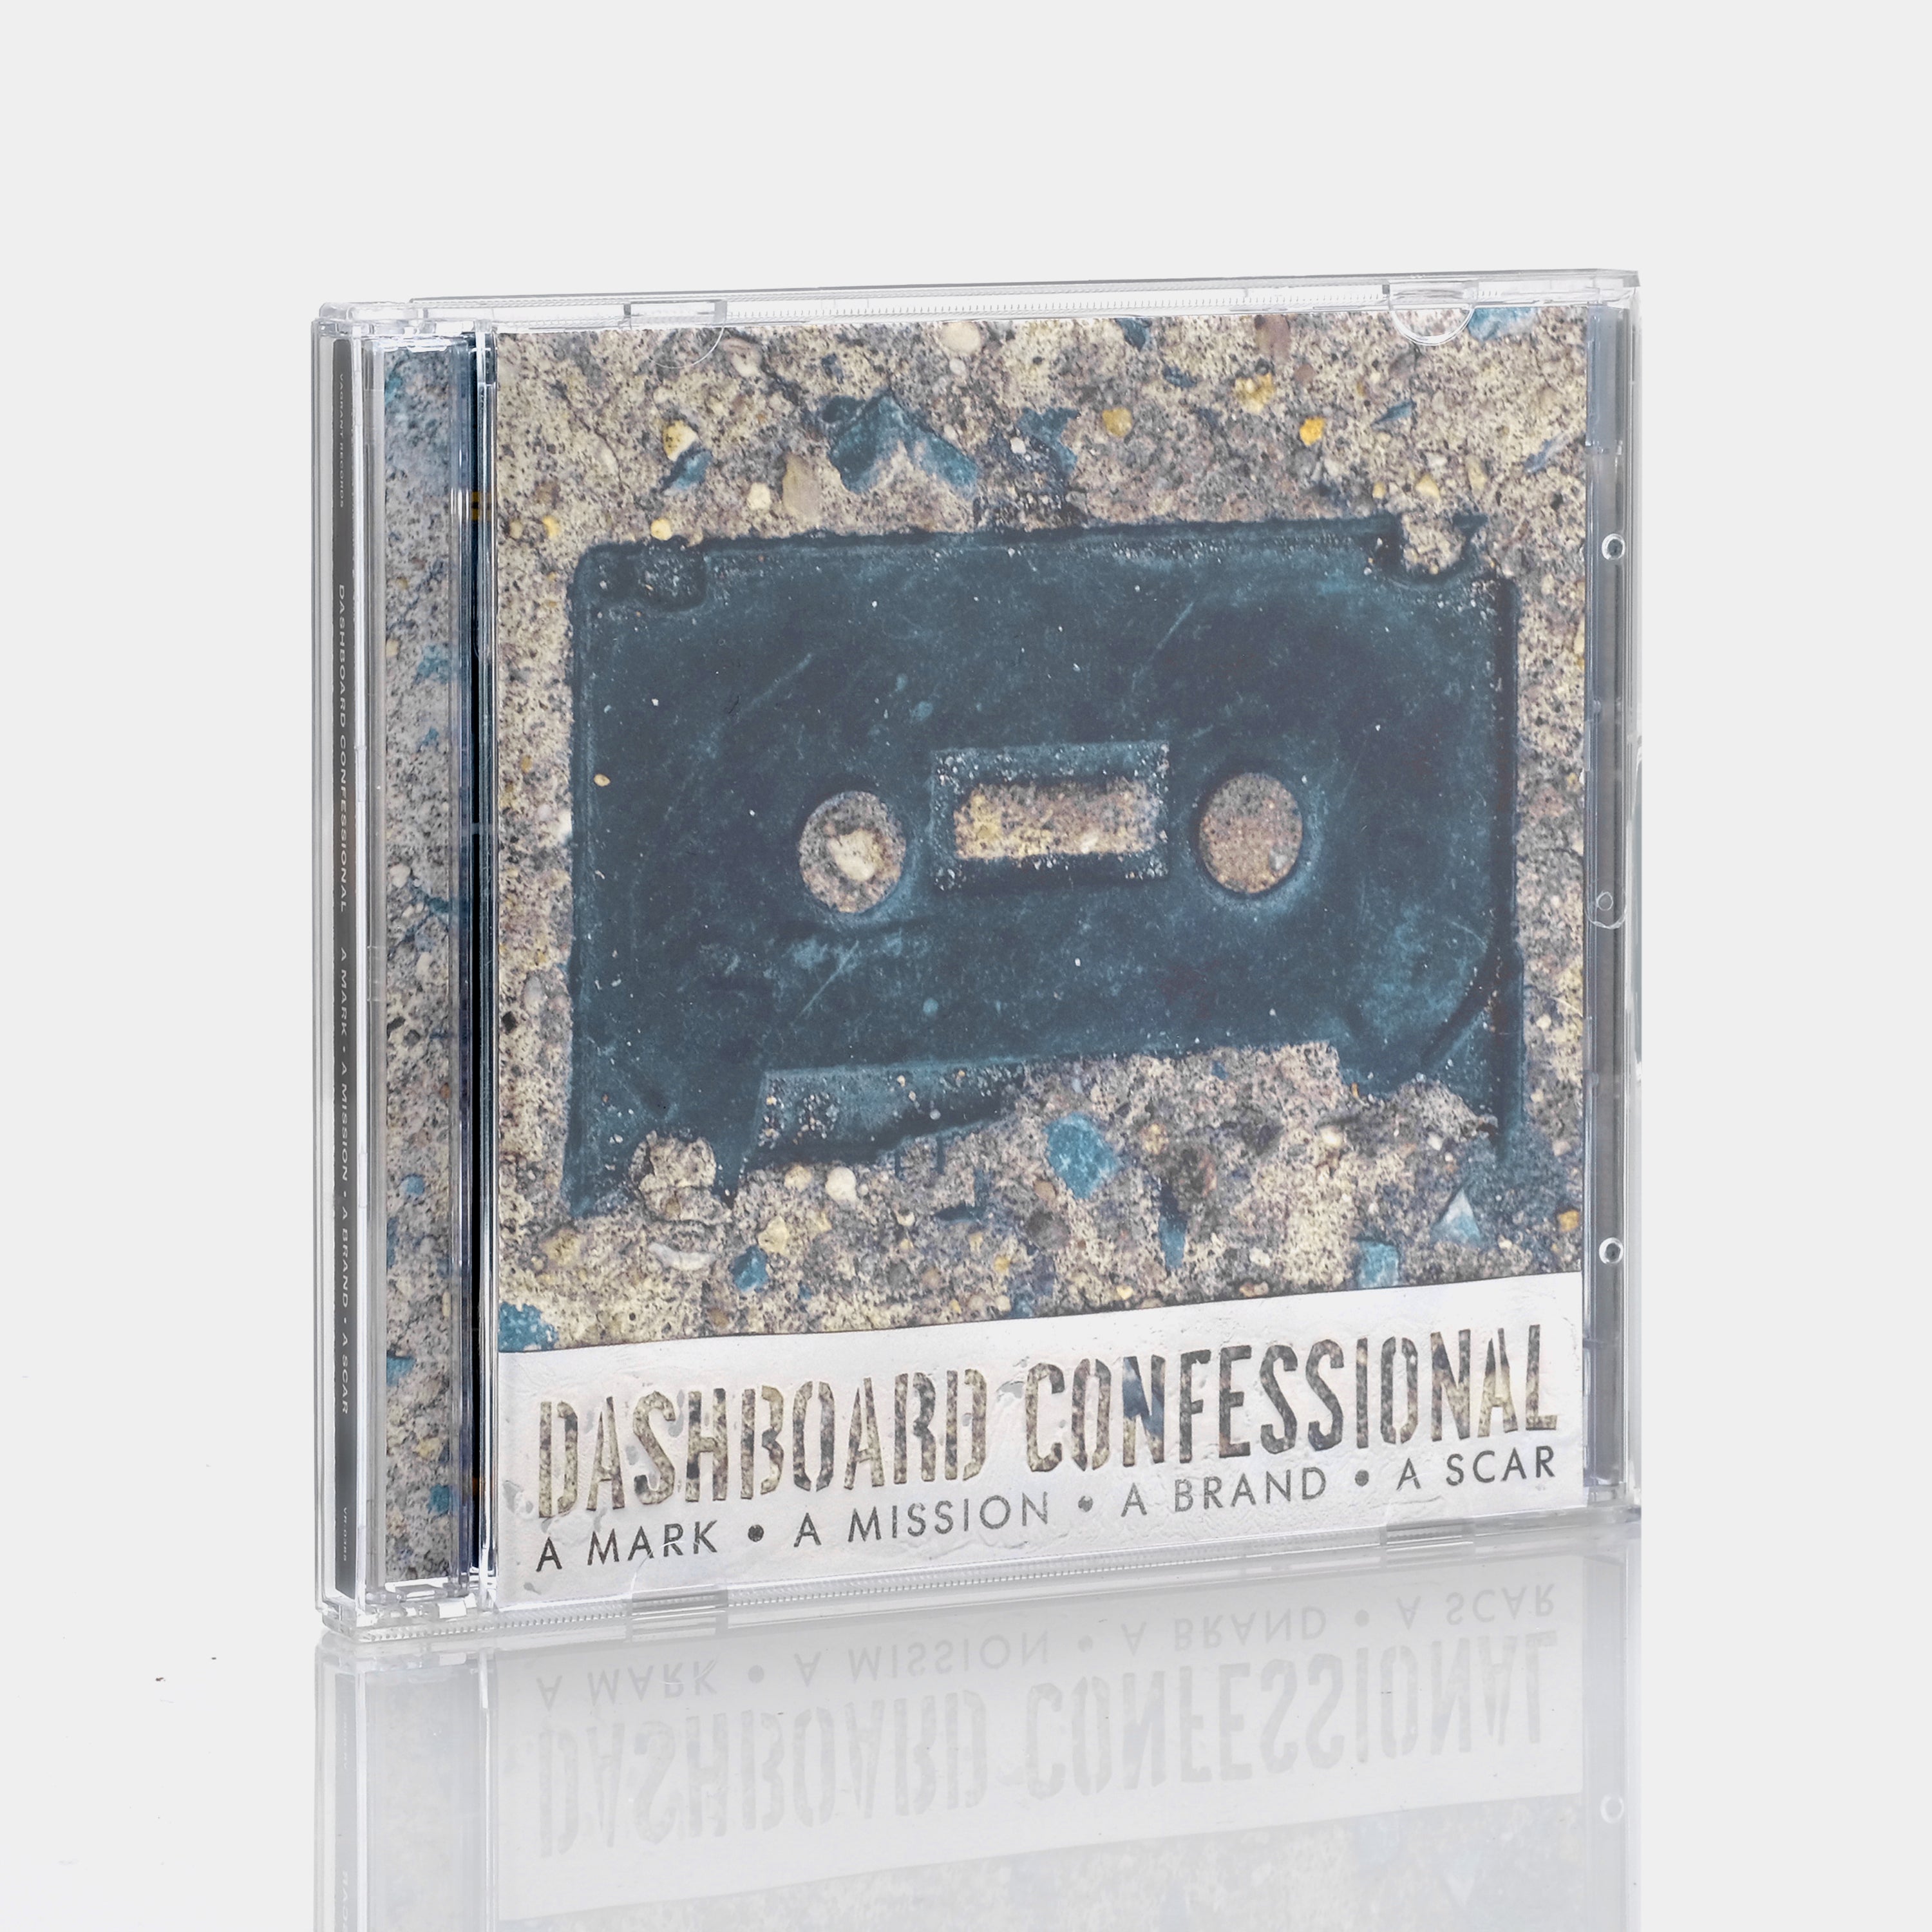 Dashboard Confessional - A Mark. A Mission. A Brand. A Scar CD & DVD